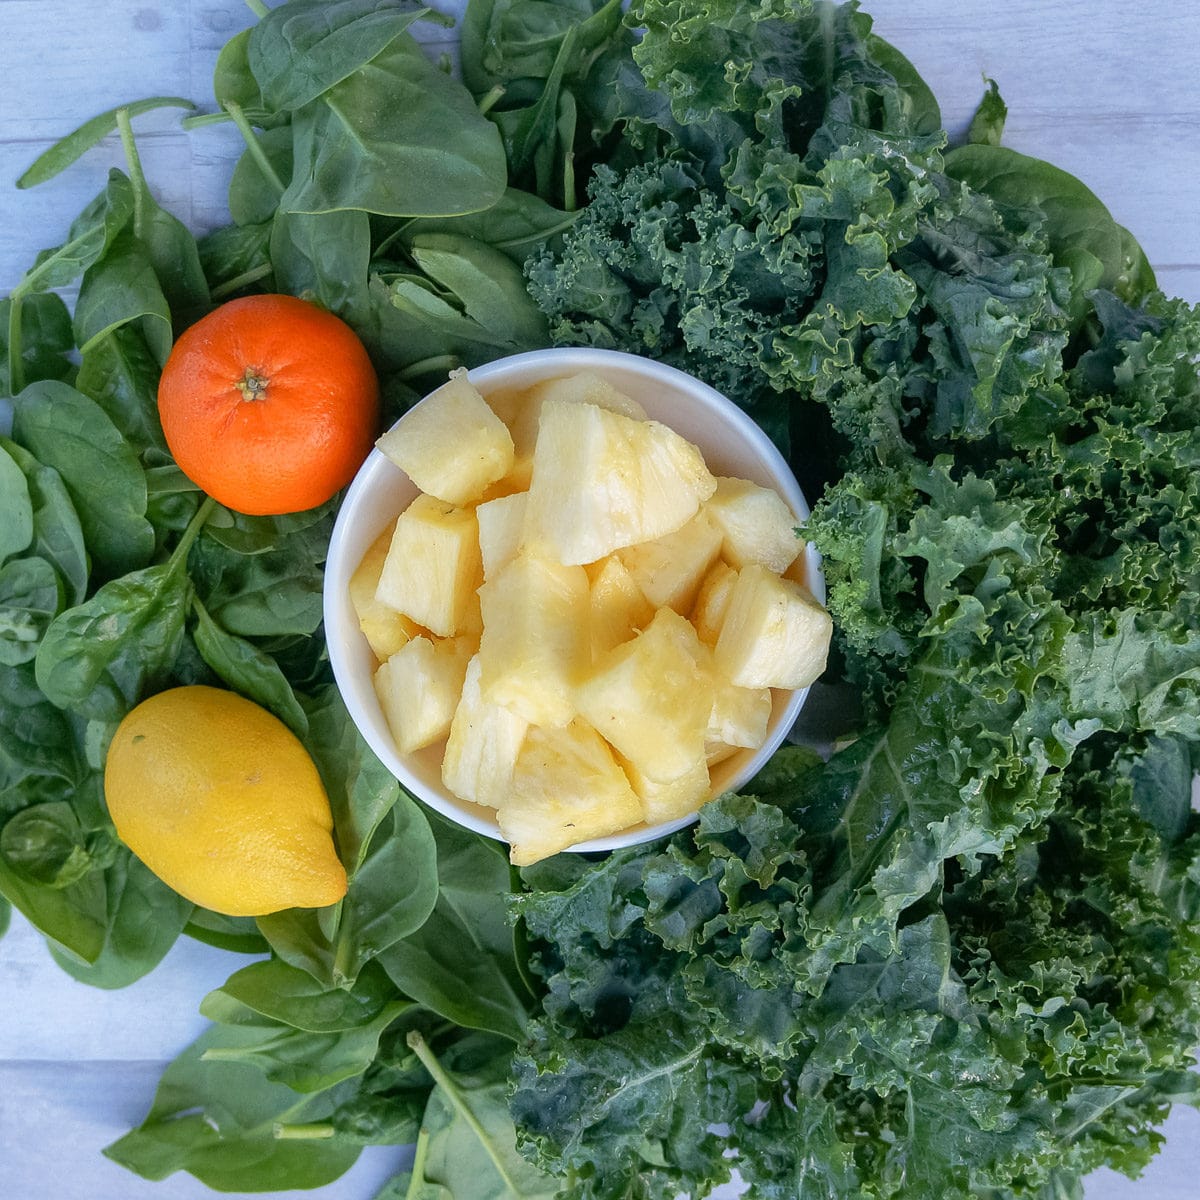 Iron rich smoothie ingredients - kale, spinach, lemon, pineapple, orange